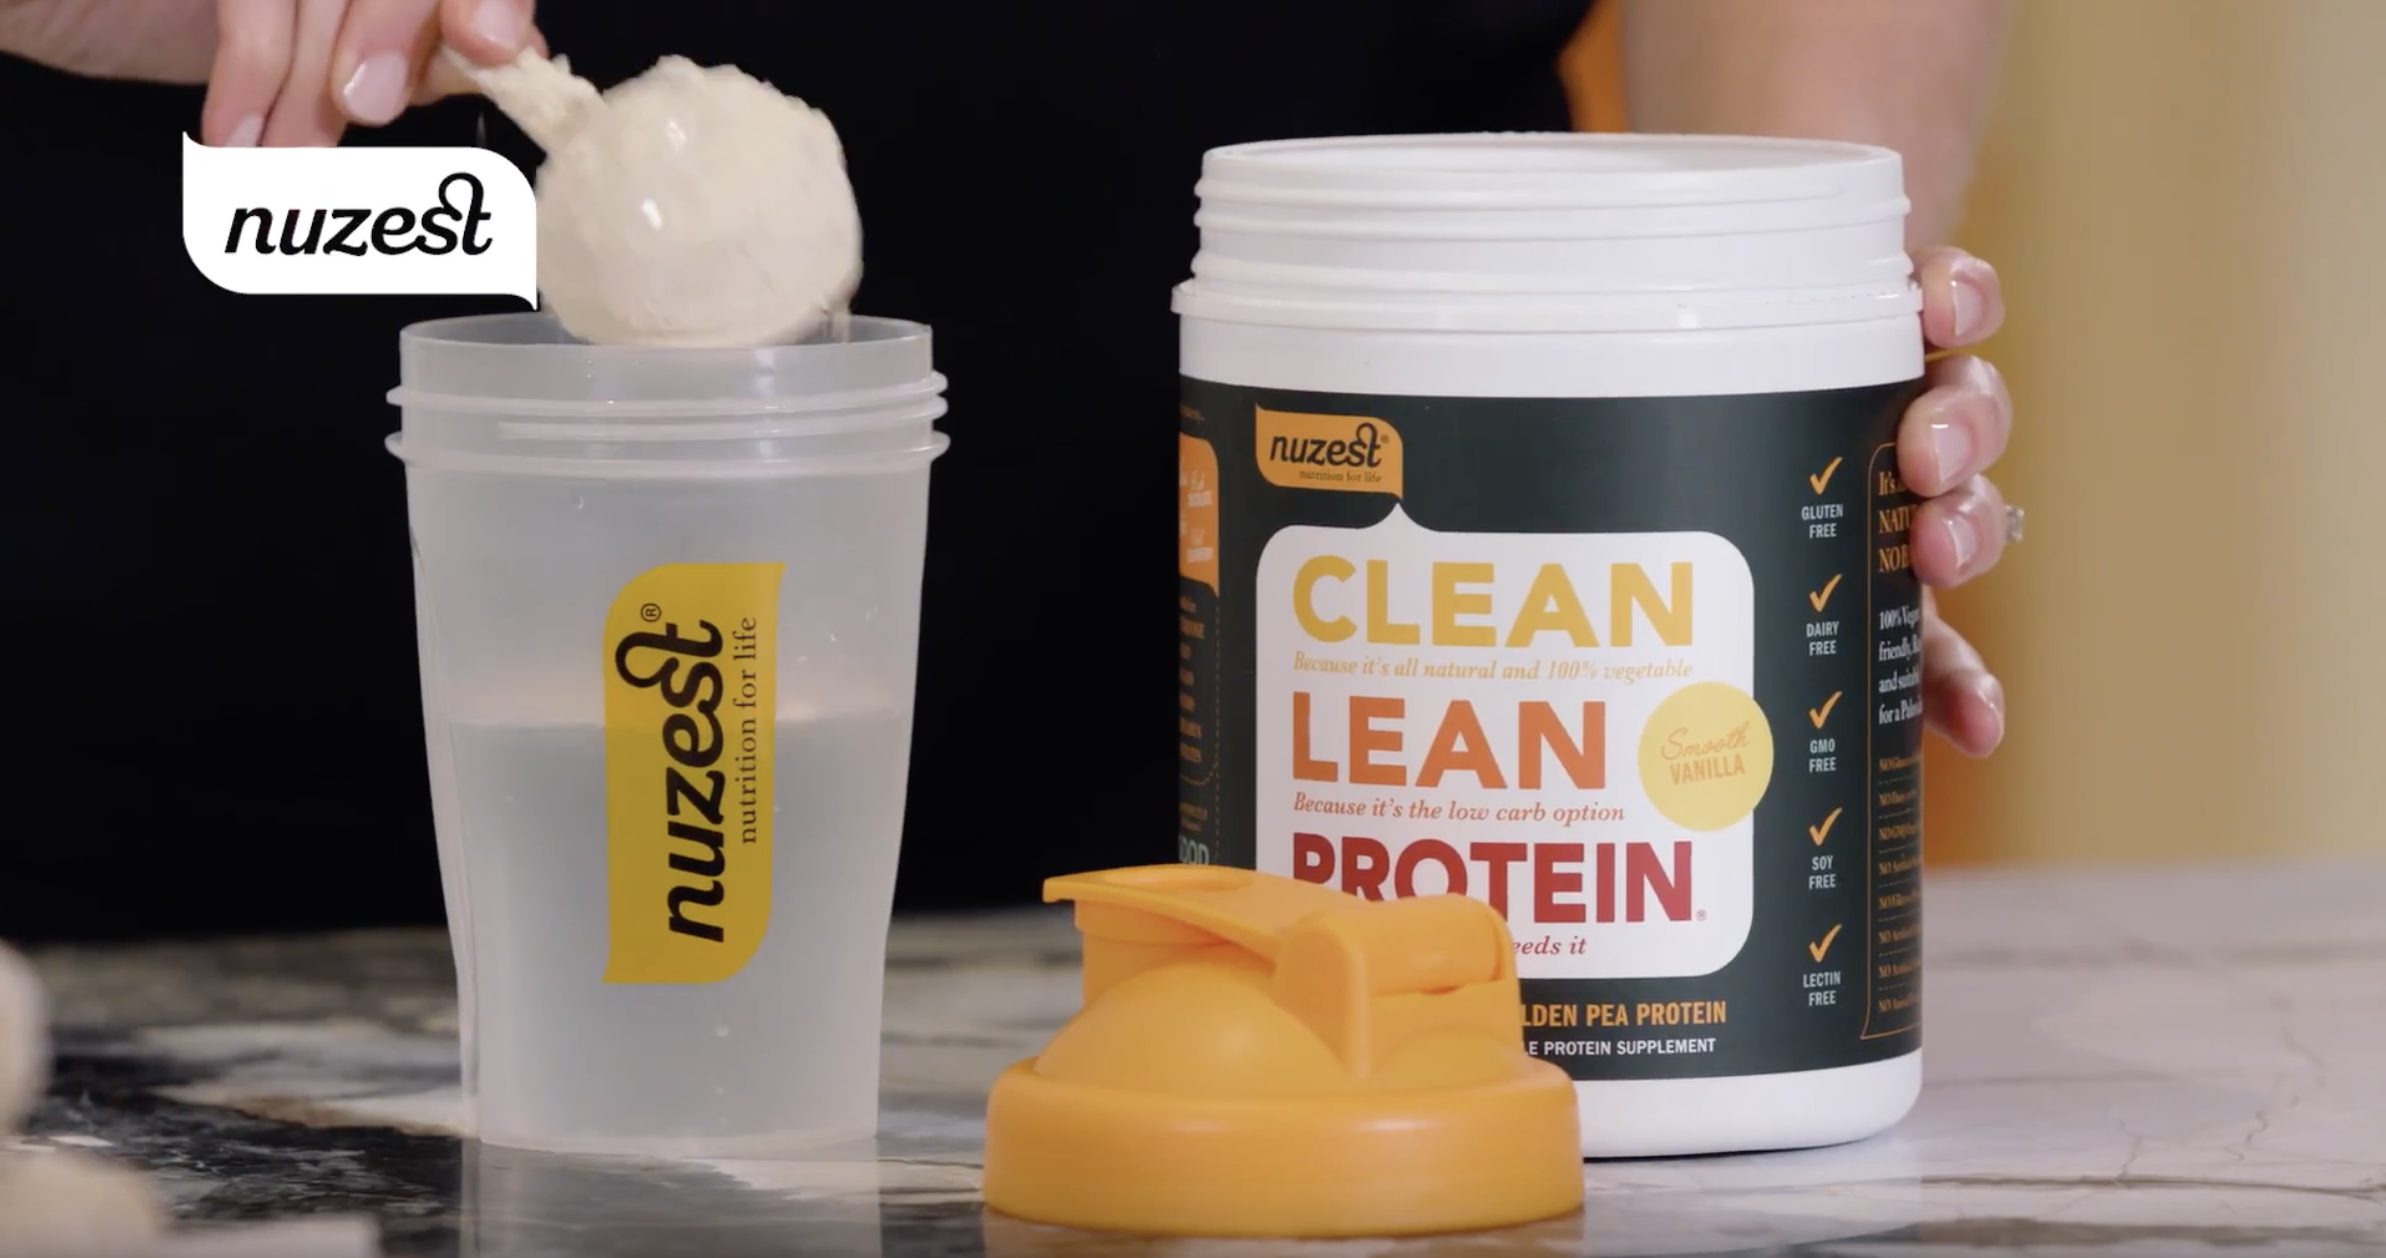 Buy 2 Clean Lean Protein 500g Get 1 free Clean Lean Protein functional flavor 500g